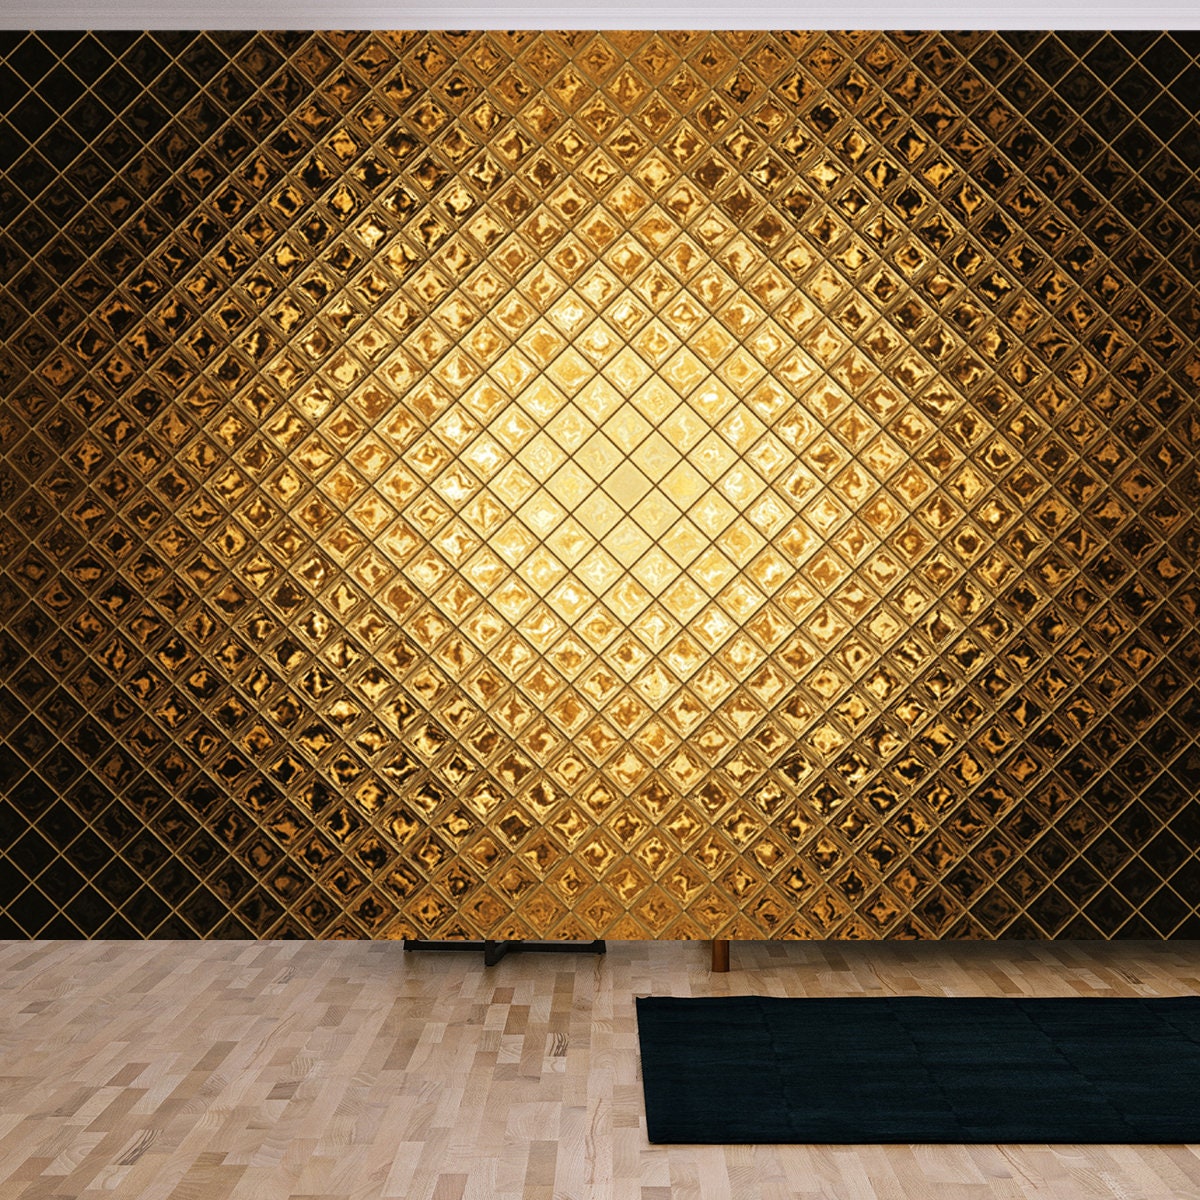 Luxurious Golden Background Wallpaper Living Room Mural